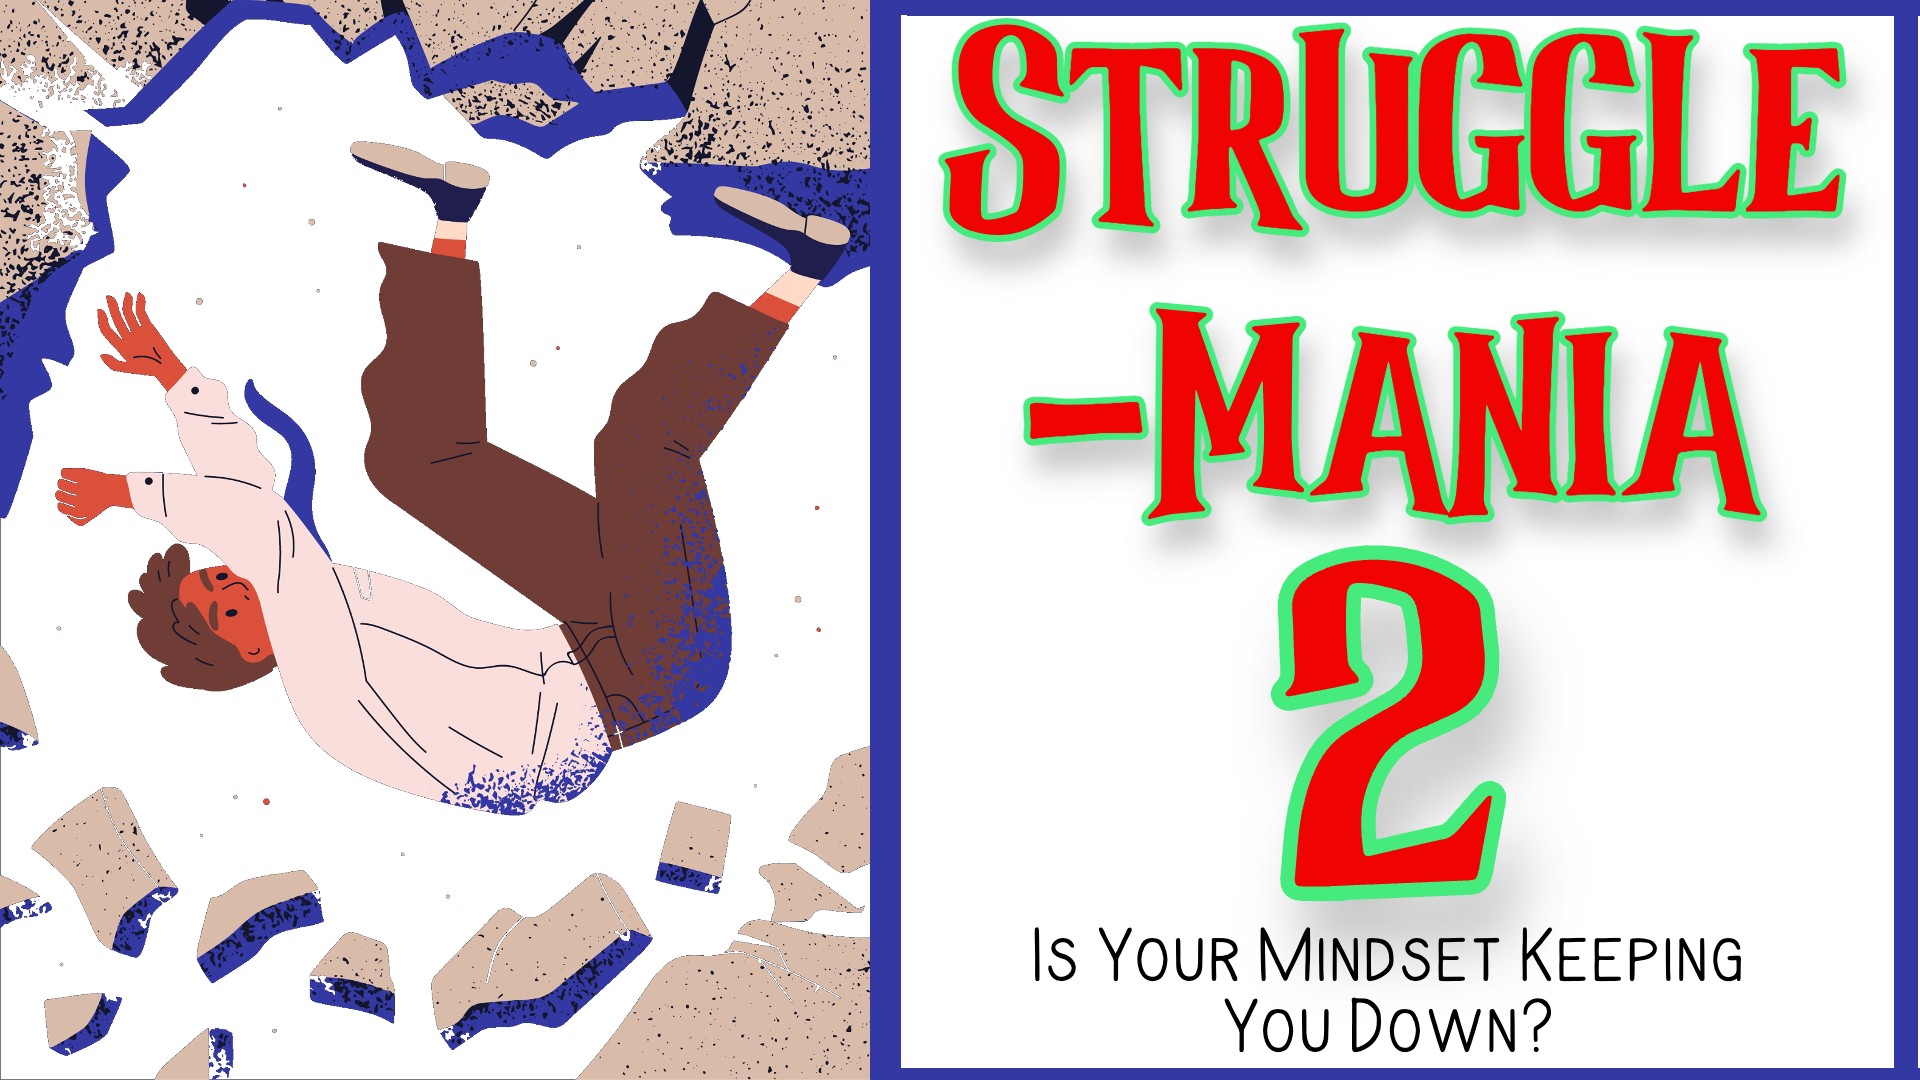 Struggle-Mania 2